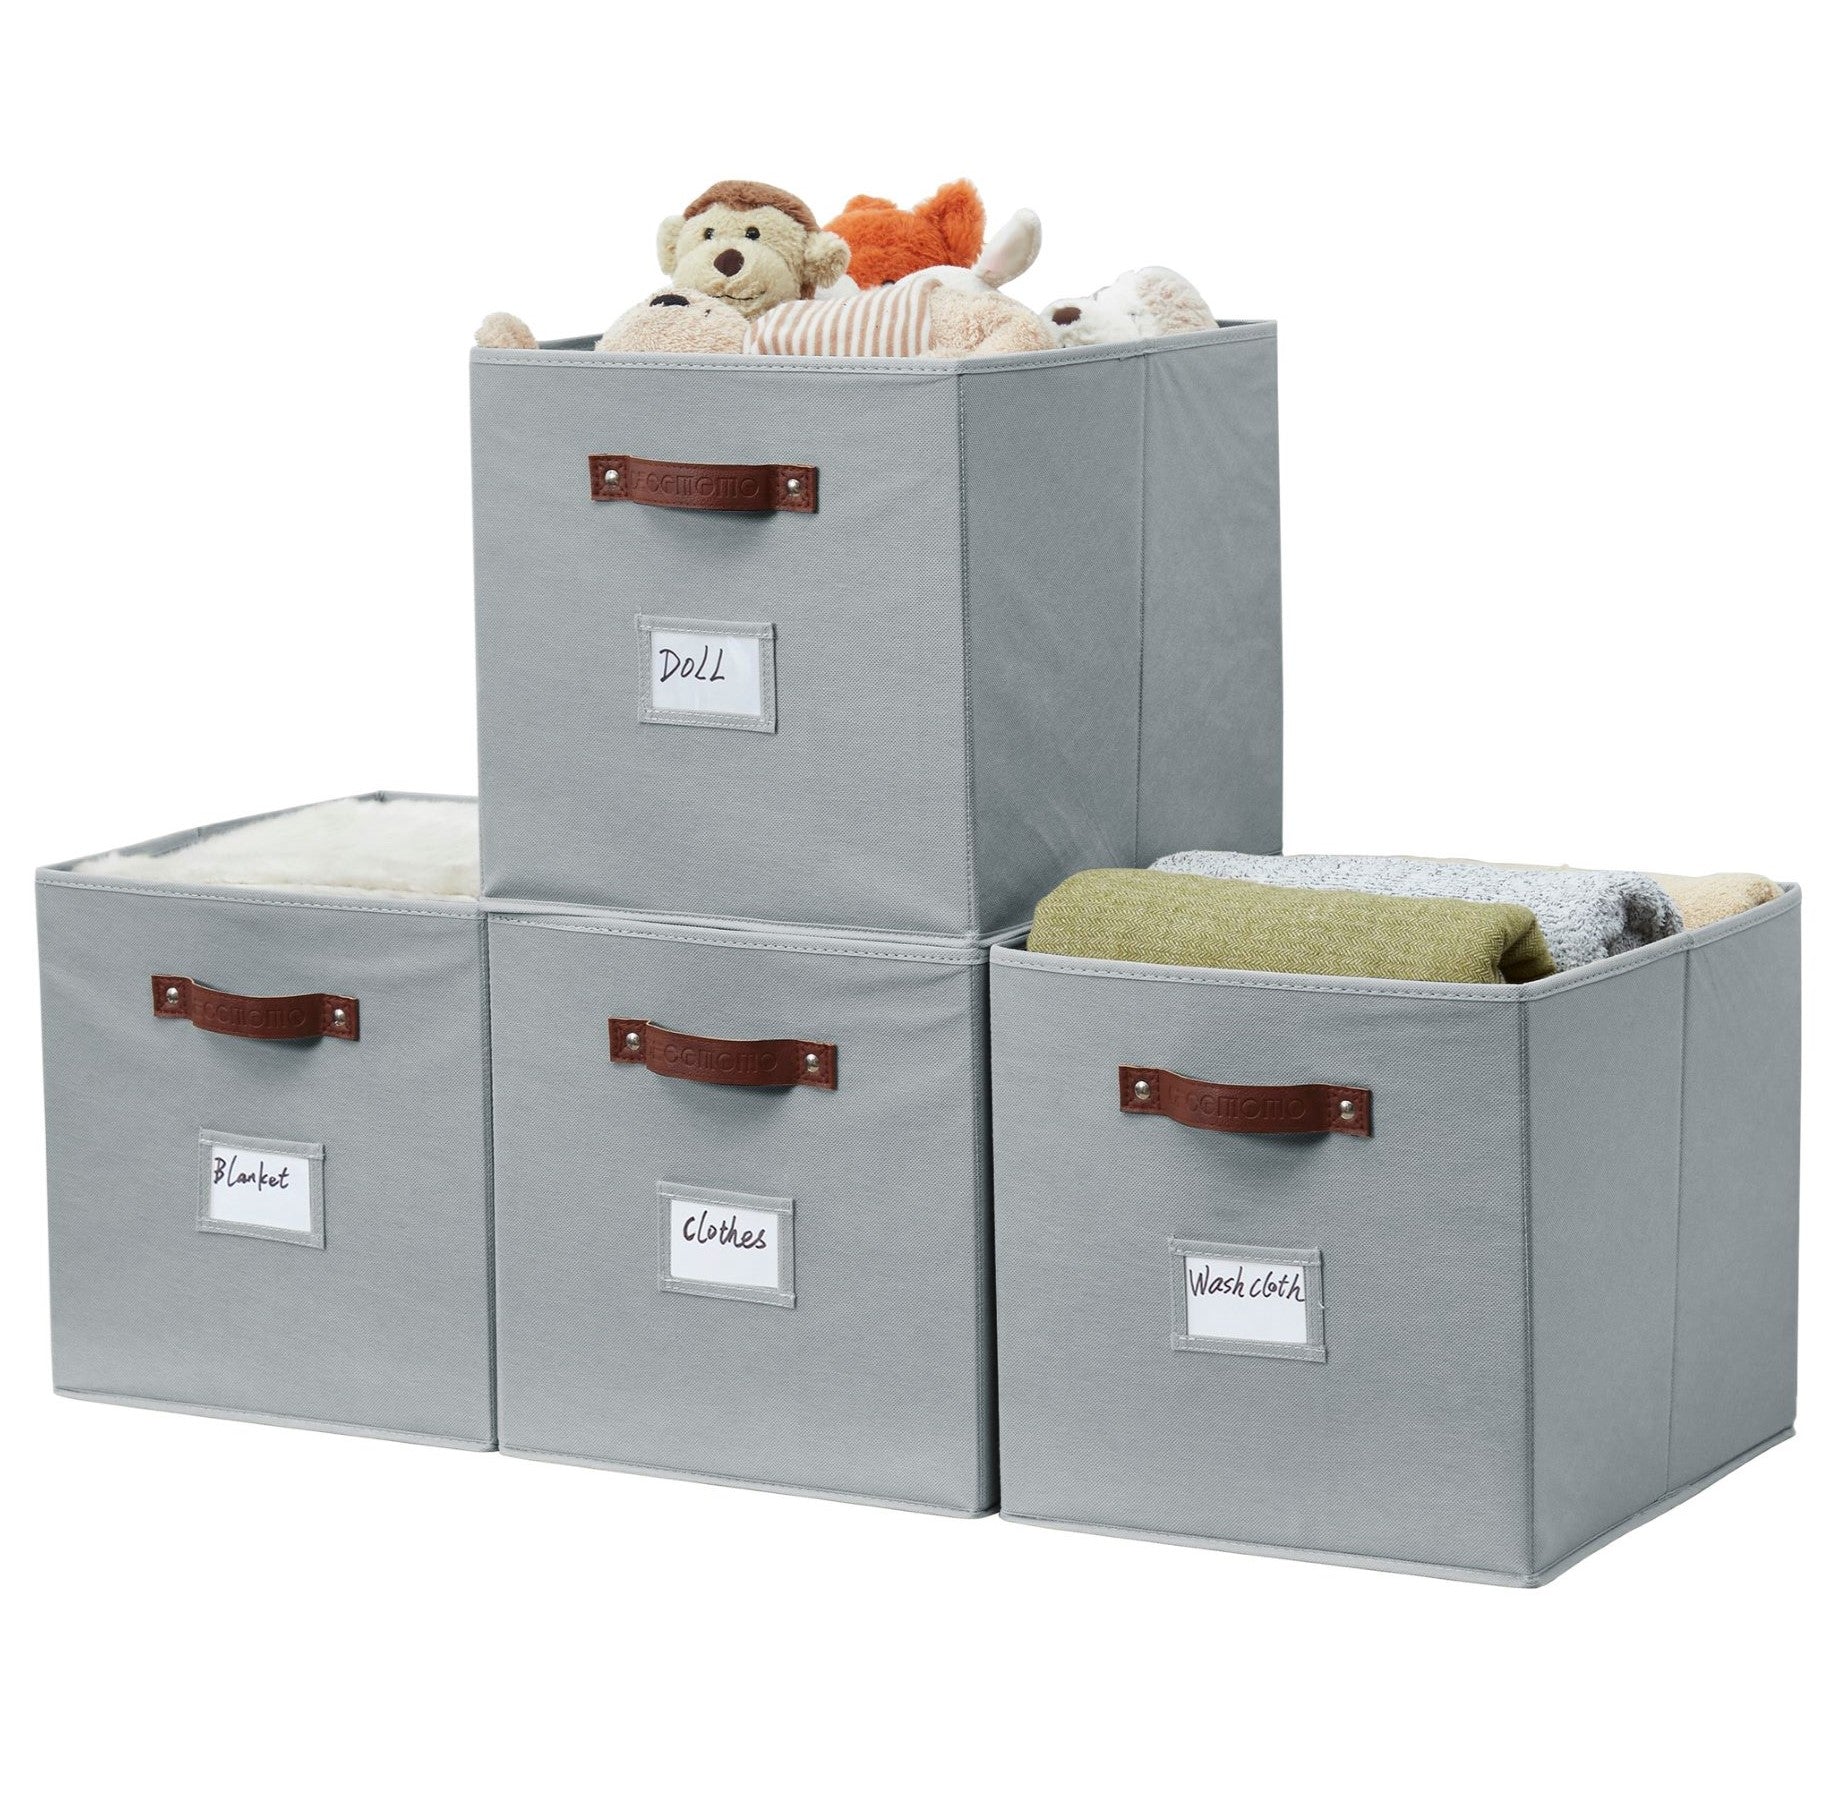 6 Shelf Kallax Storage for 12 X 12 Plastic Storage Containers for